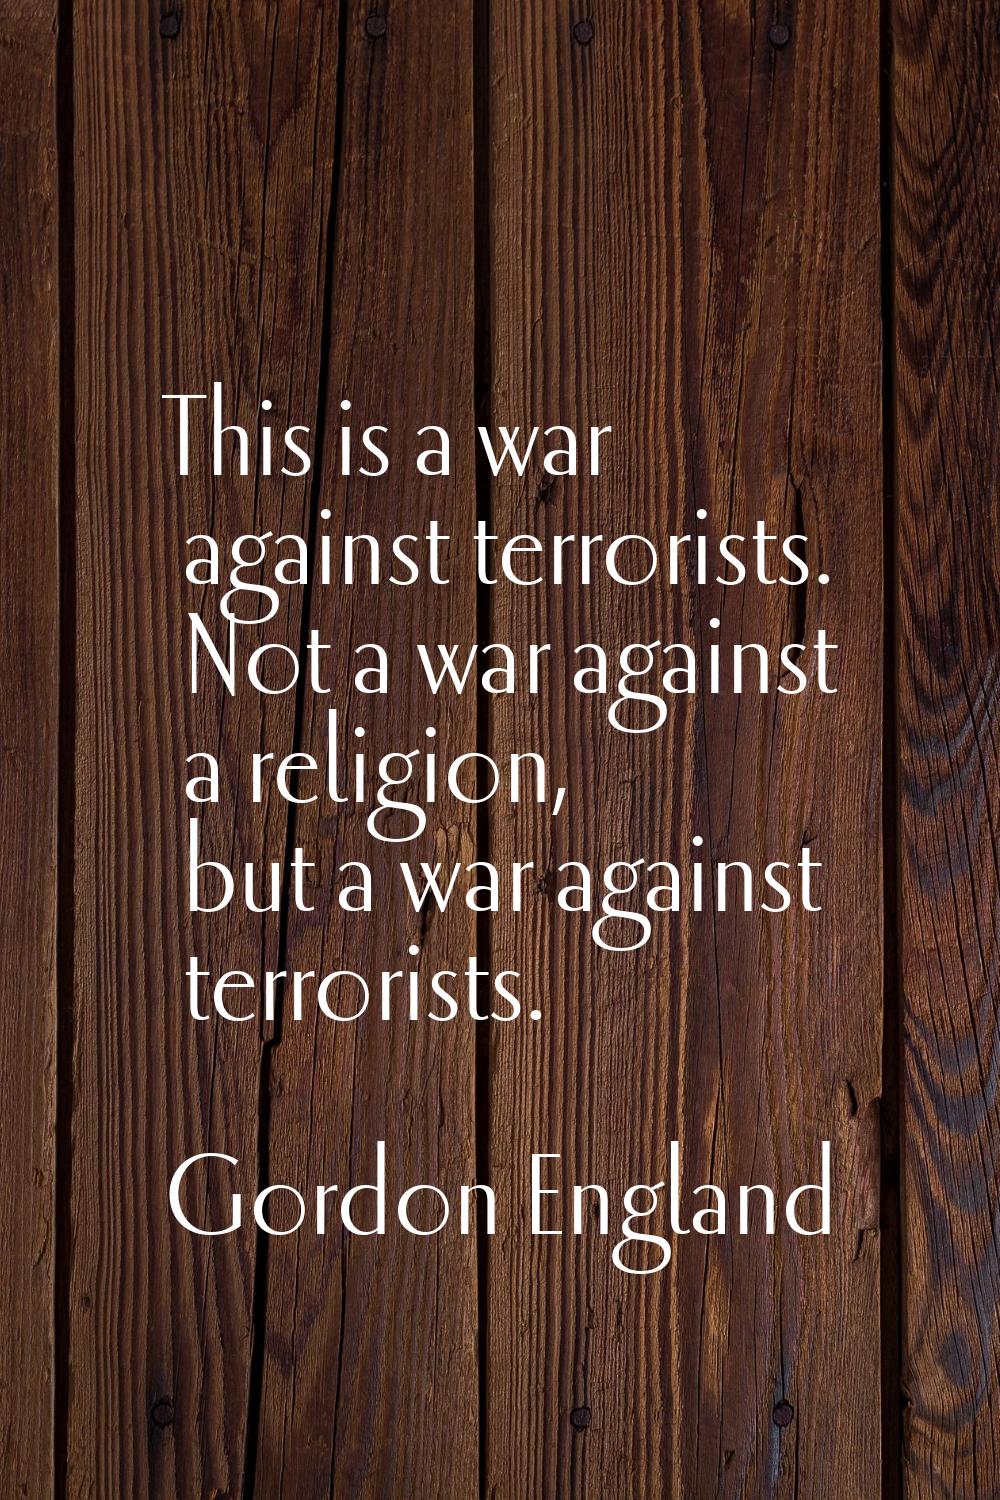 This is a war against terrorists. Not a war against a religion, but a war against terrorists.